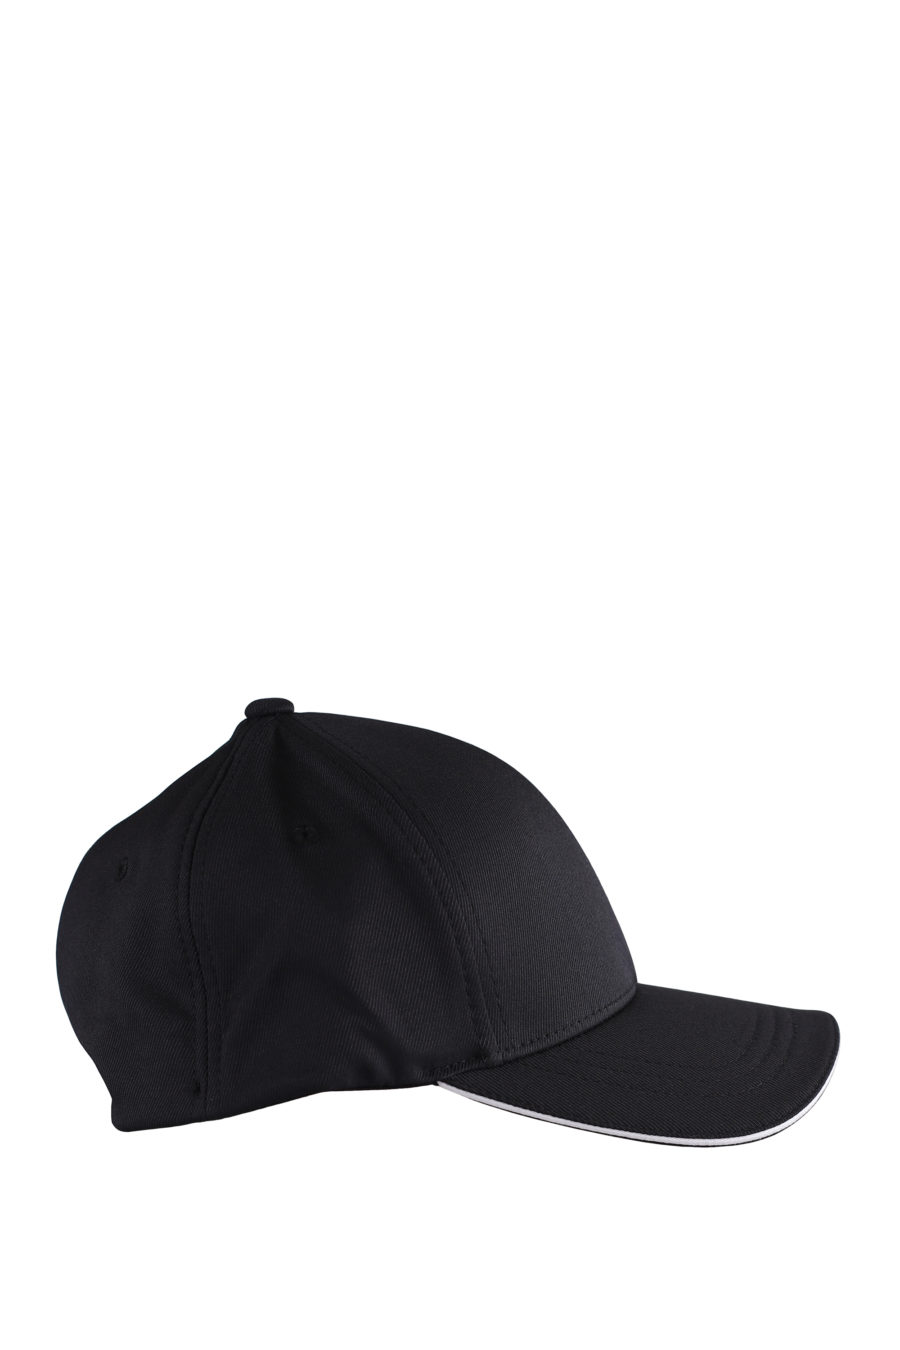 Gorra negra con logo "Karl" en blanco - IMG 9595